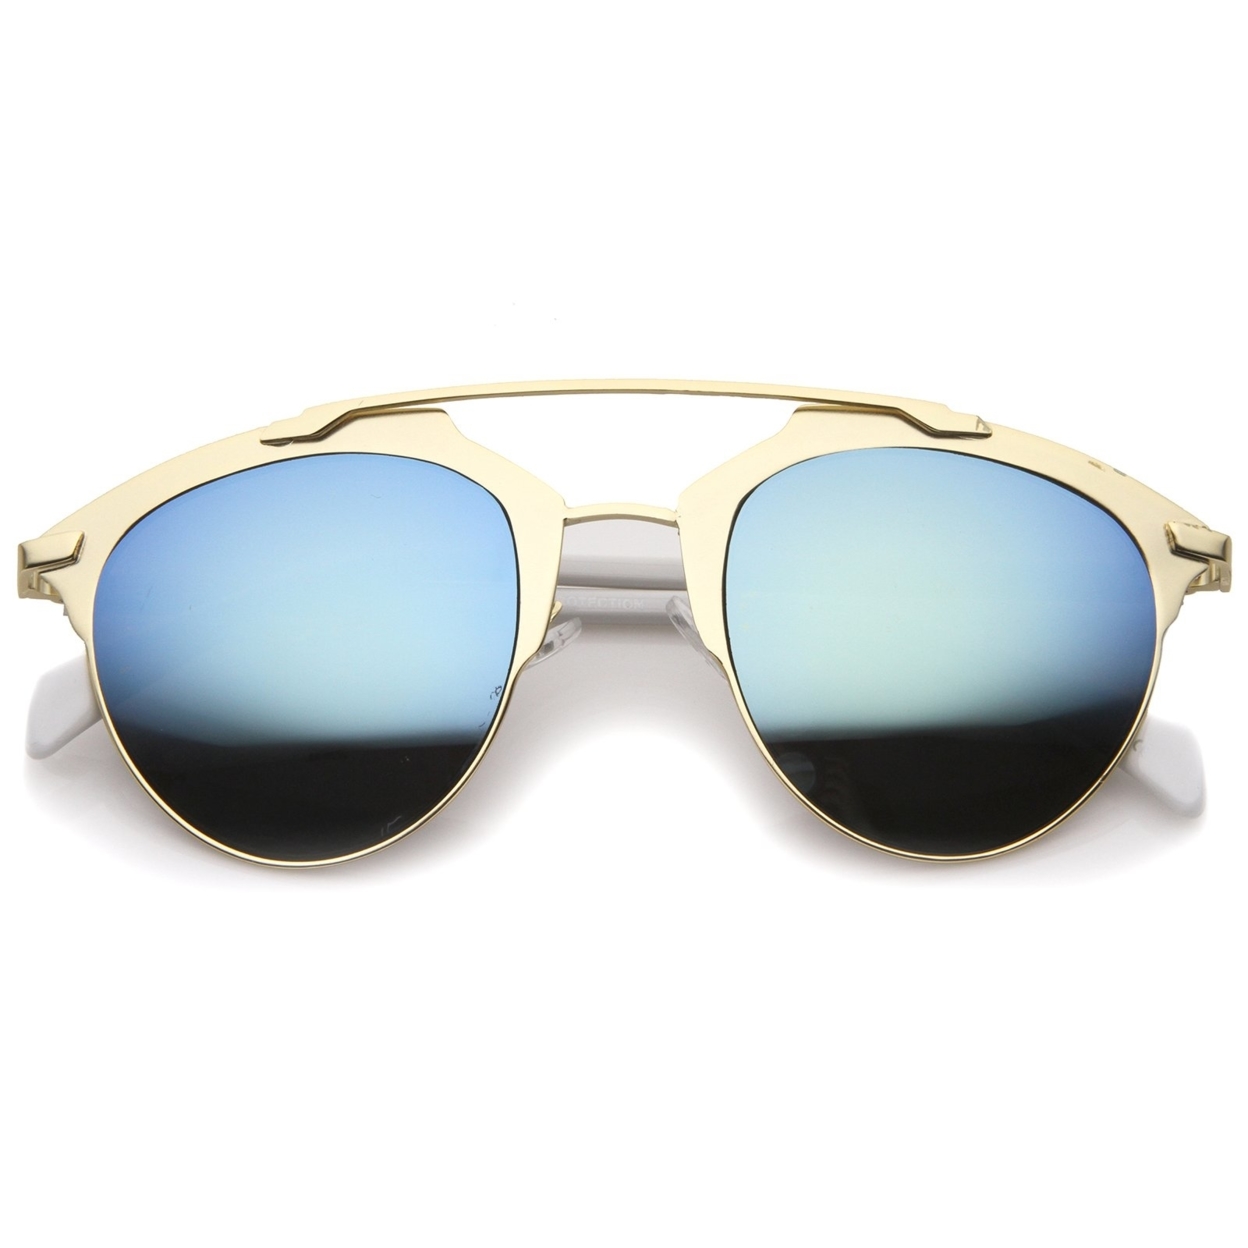 Modern Fashion Metal Double Bridge Mirror Lens Pantos Aviator Sunglasses 50mm - Silver-Black / Green Mirror